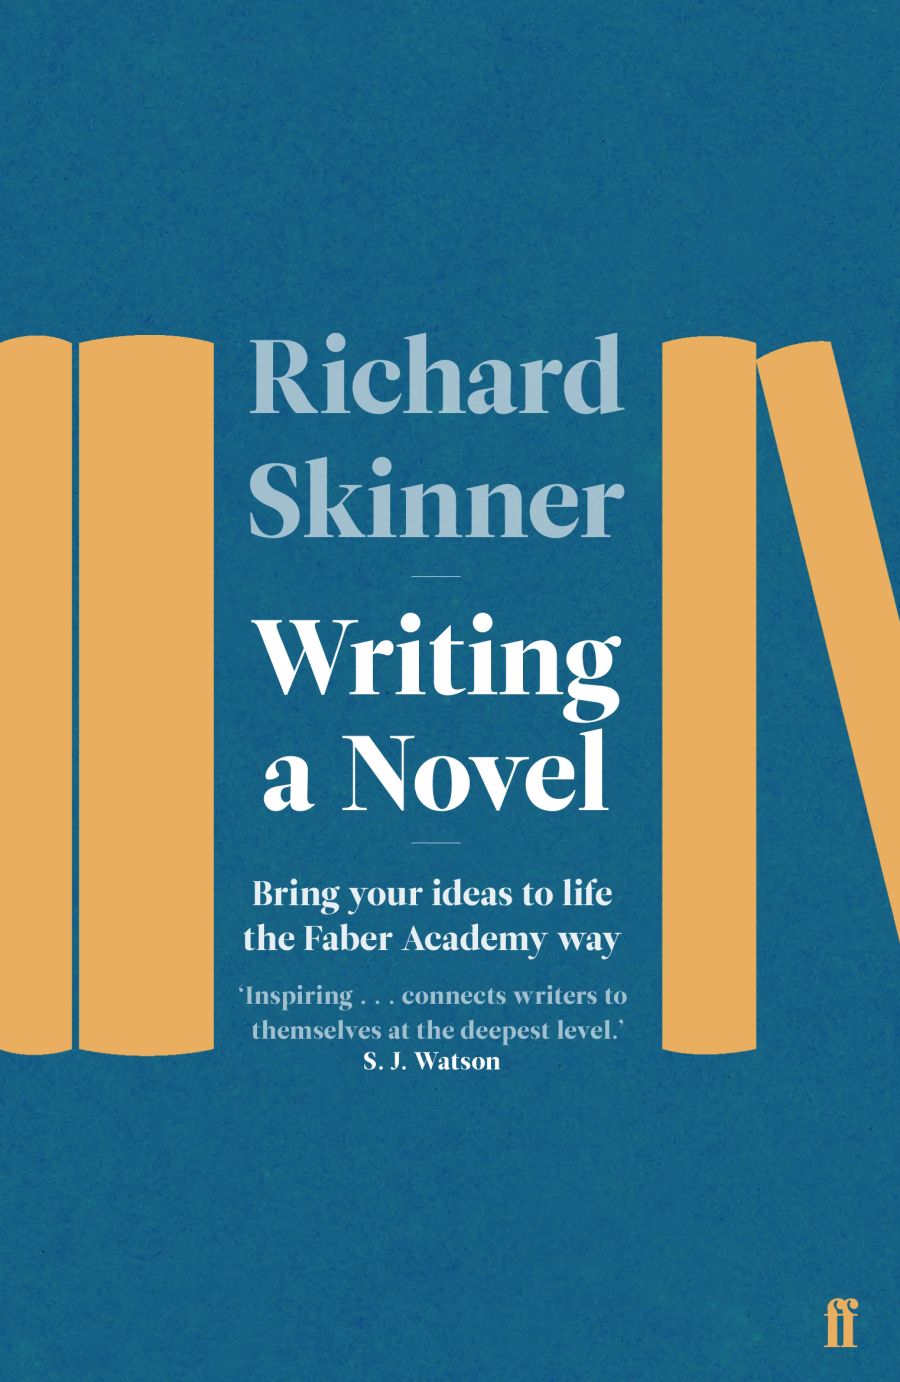 book cover: Writing a novel, by Richard Skinner.